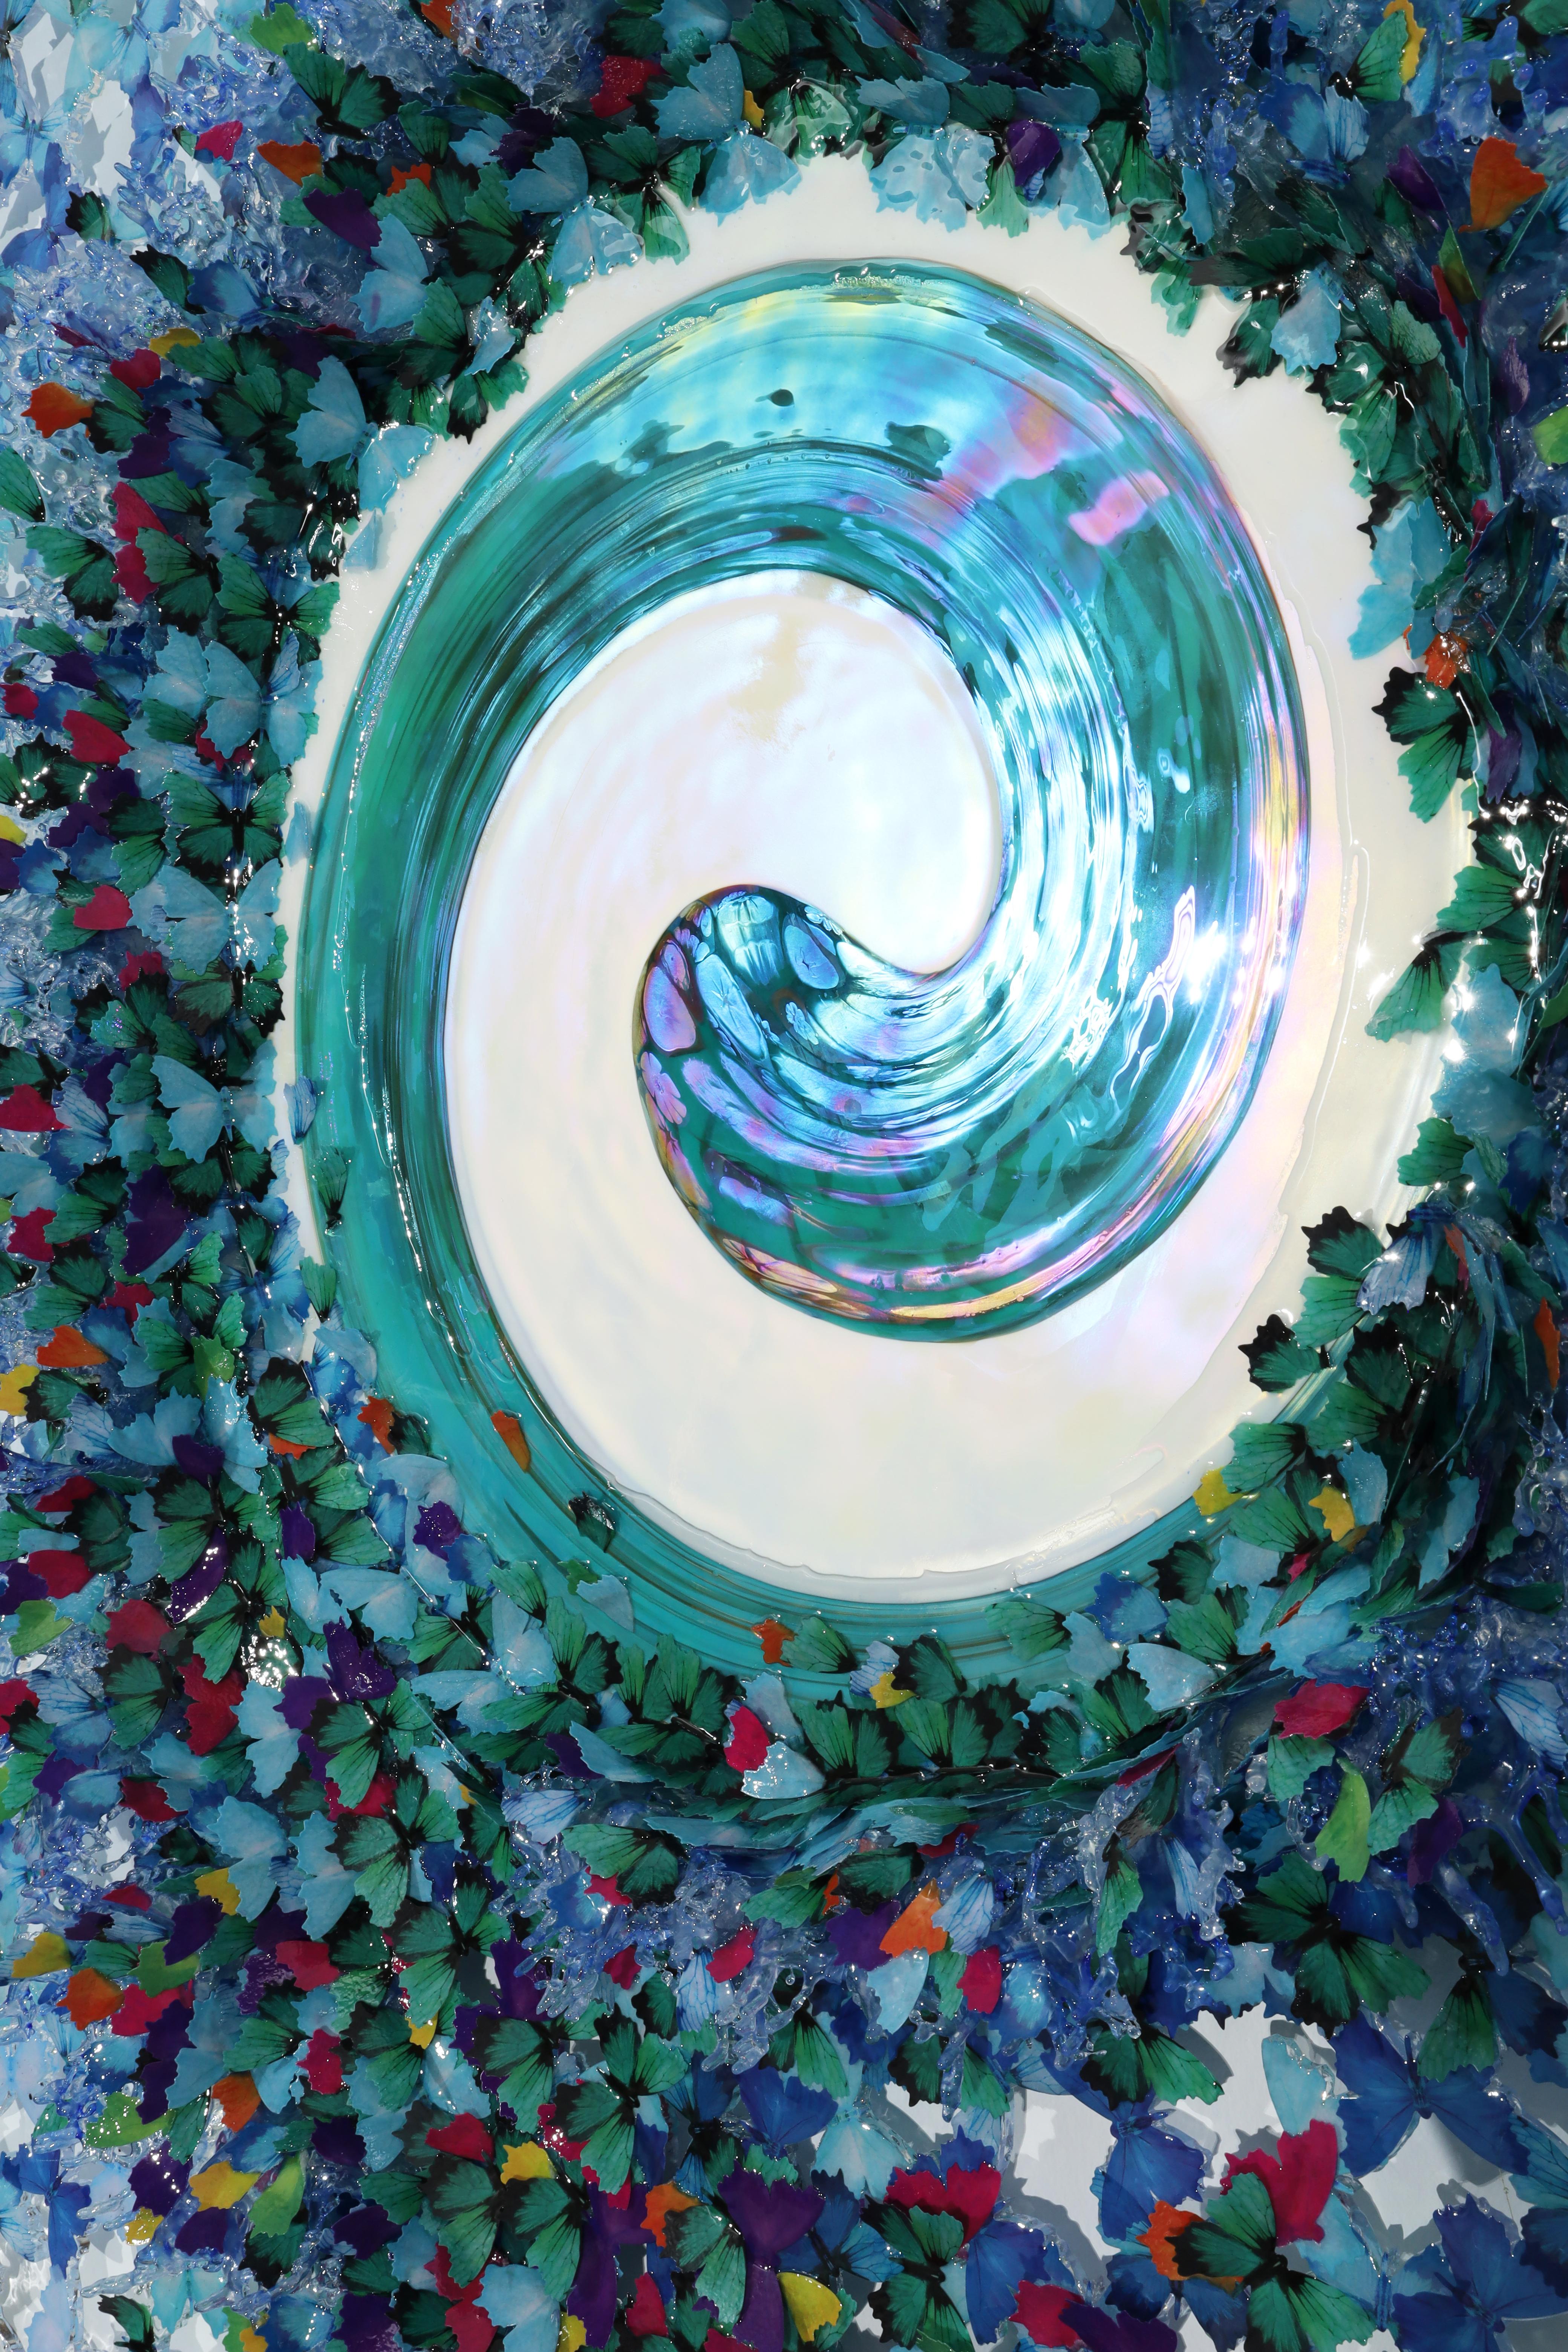 Dreamcatcher Spiral of Tales 180 cm 1